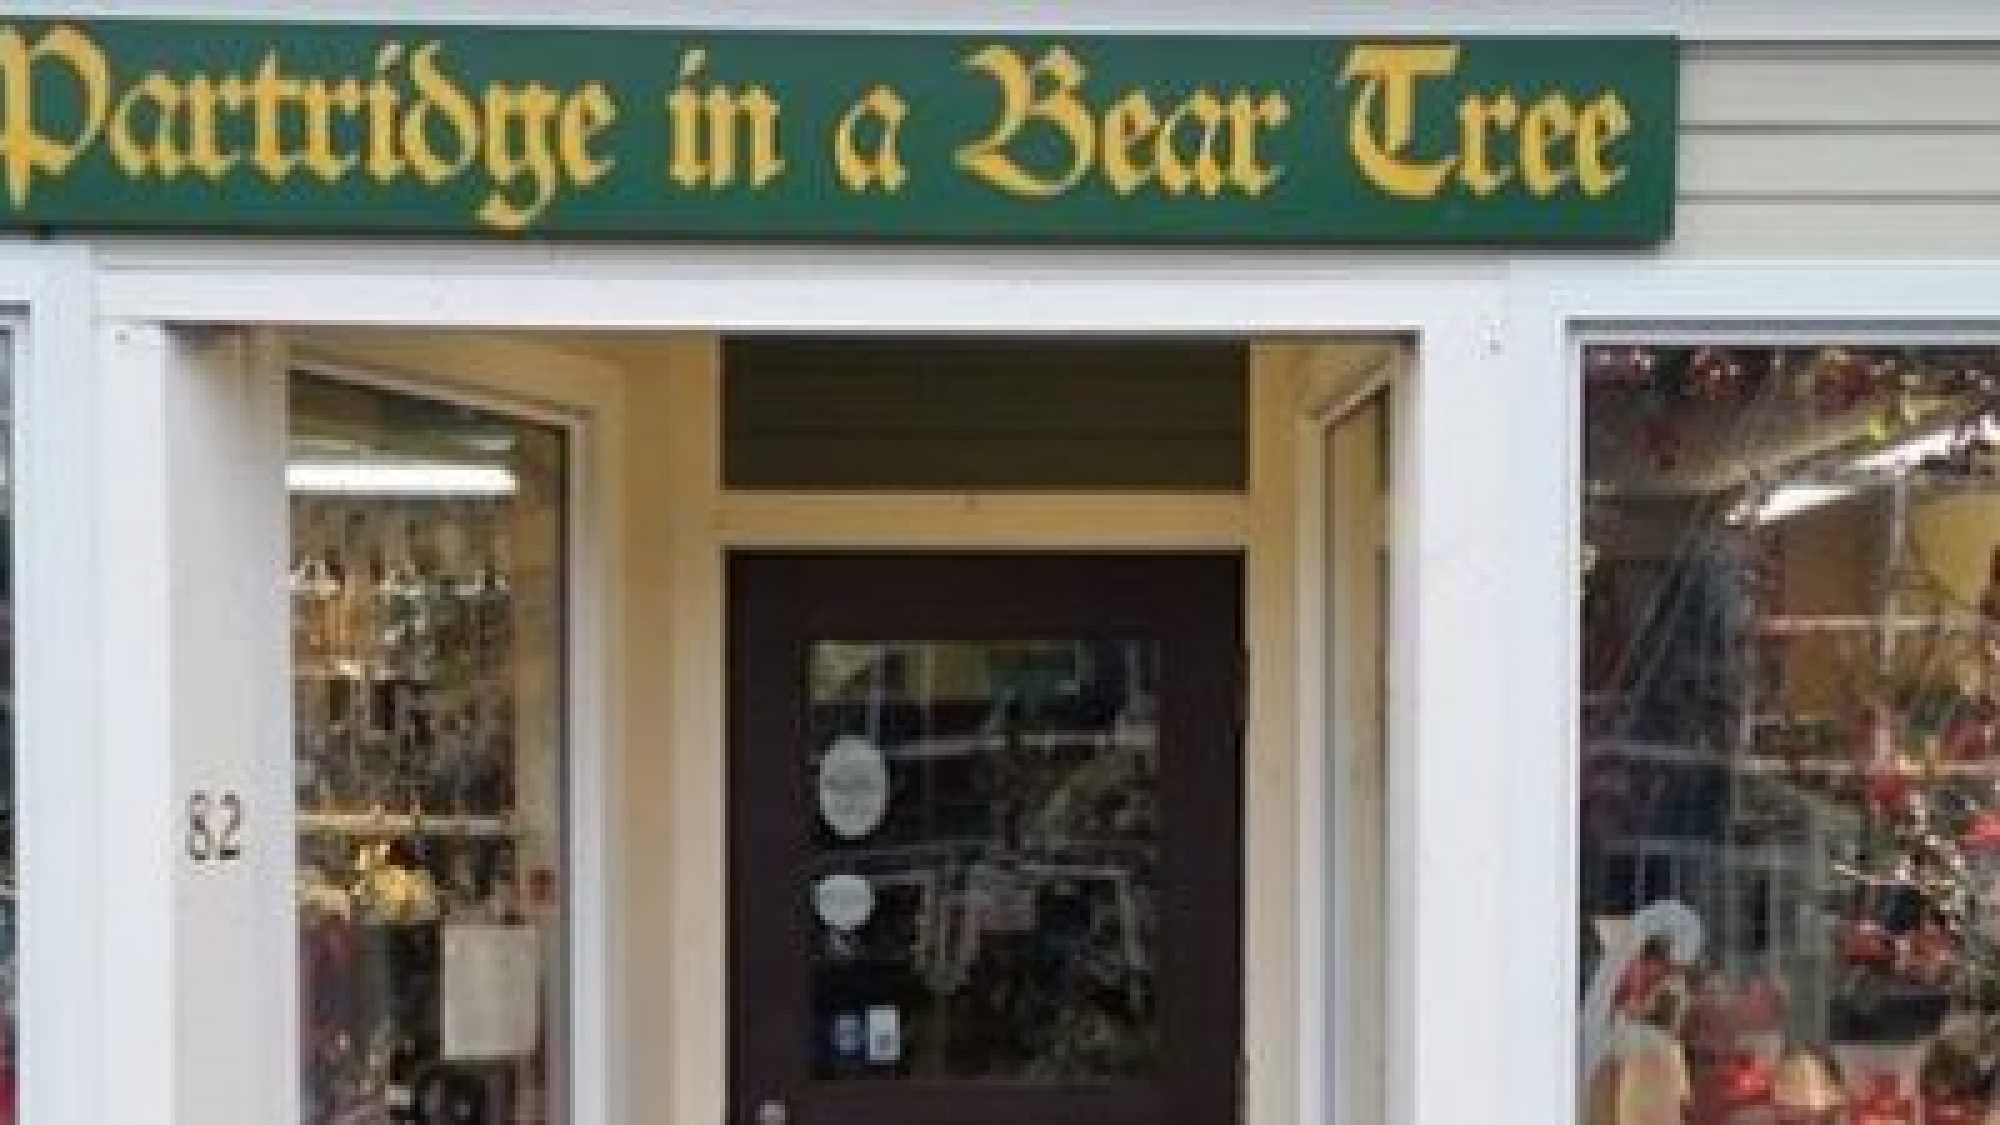 Partridge in a Bear Tree shop front